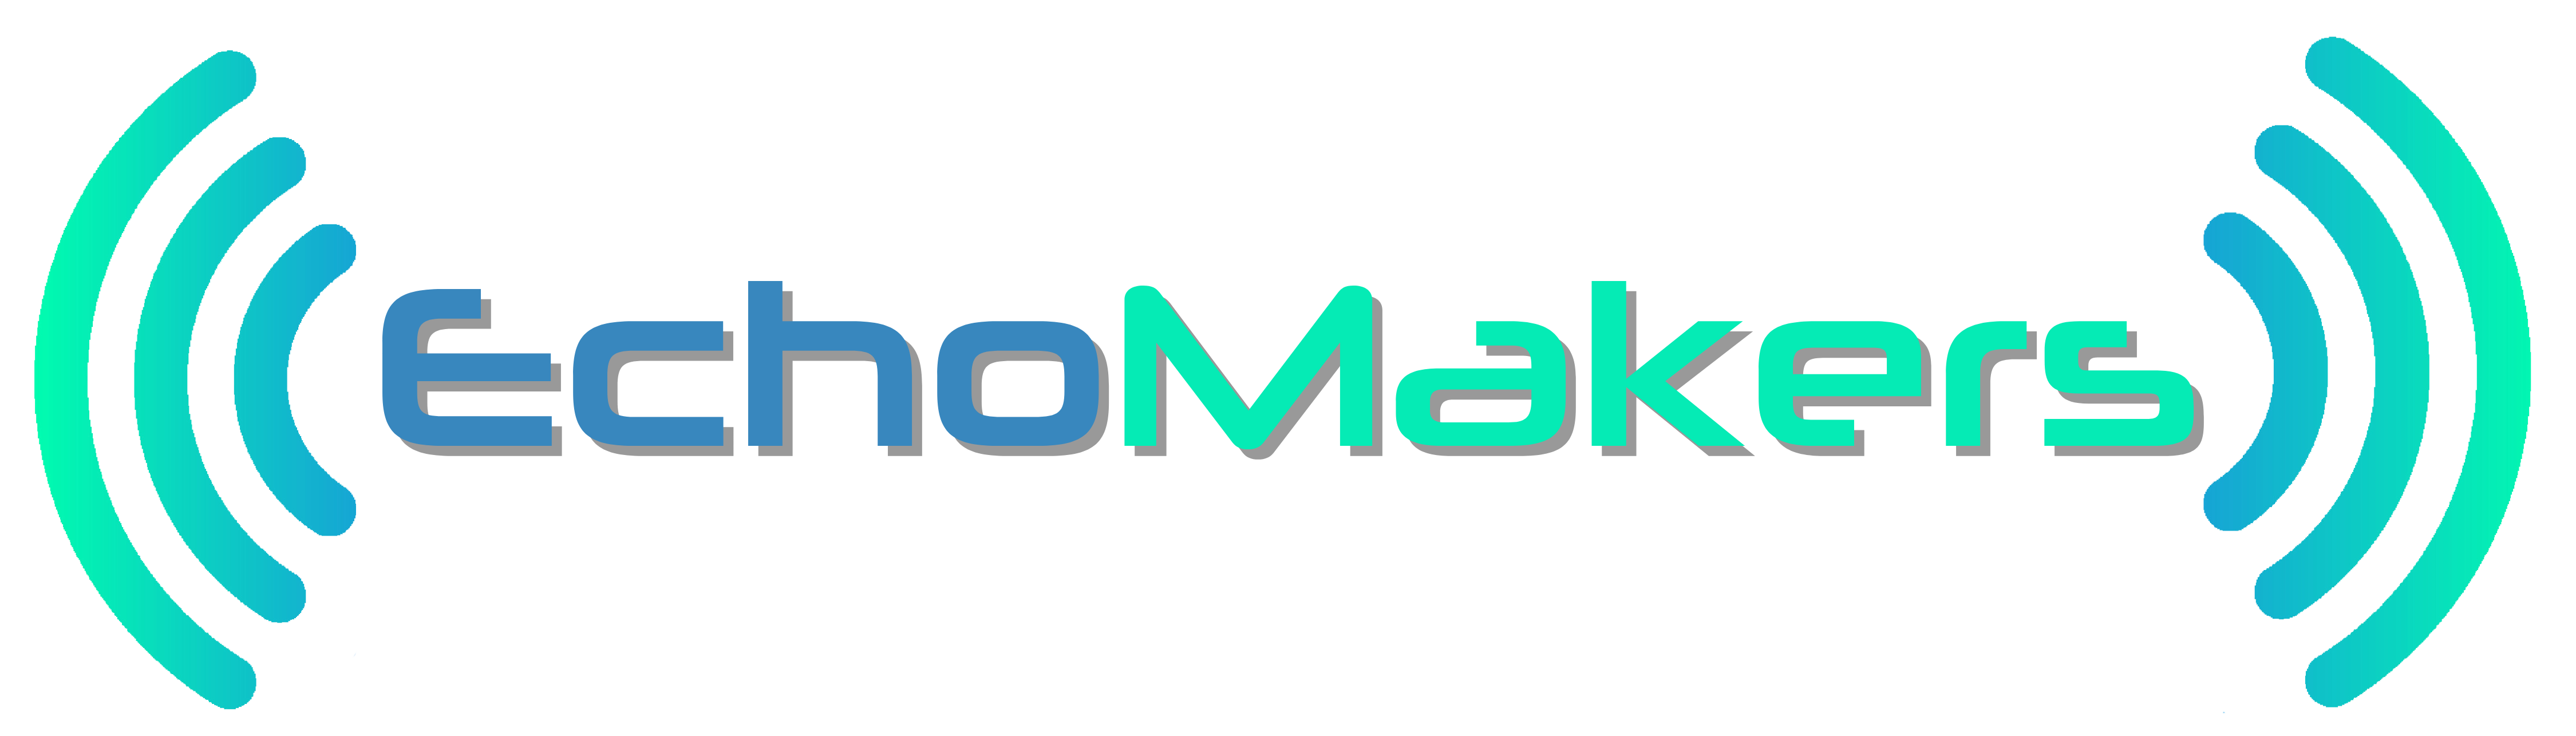 EchoMakers Logo big